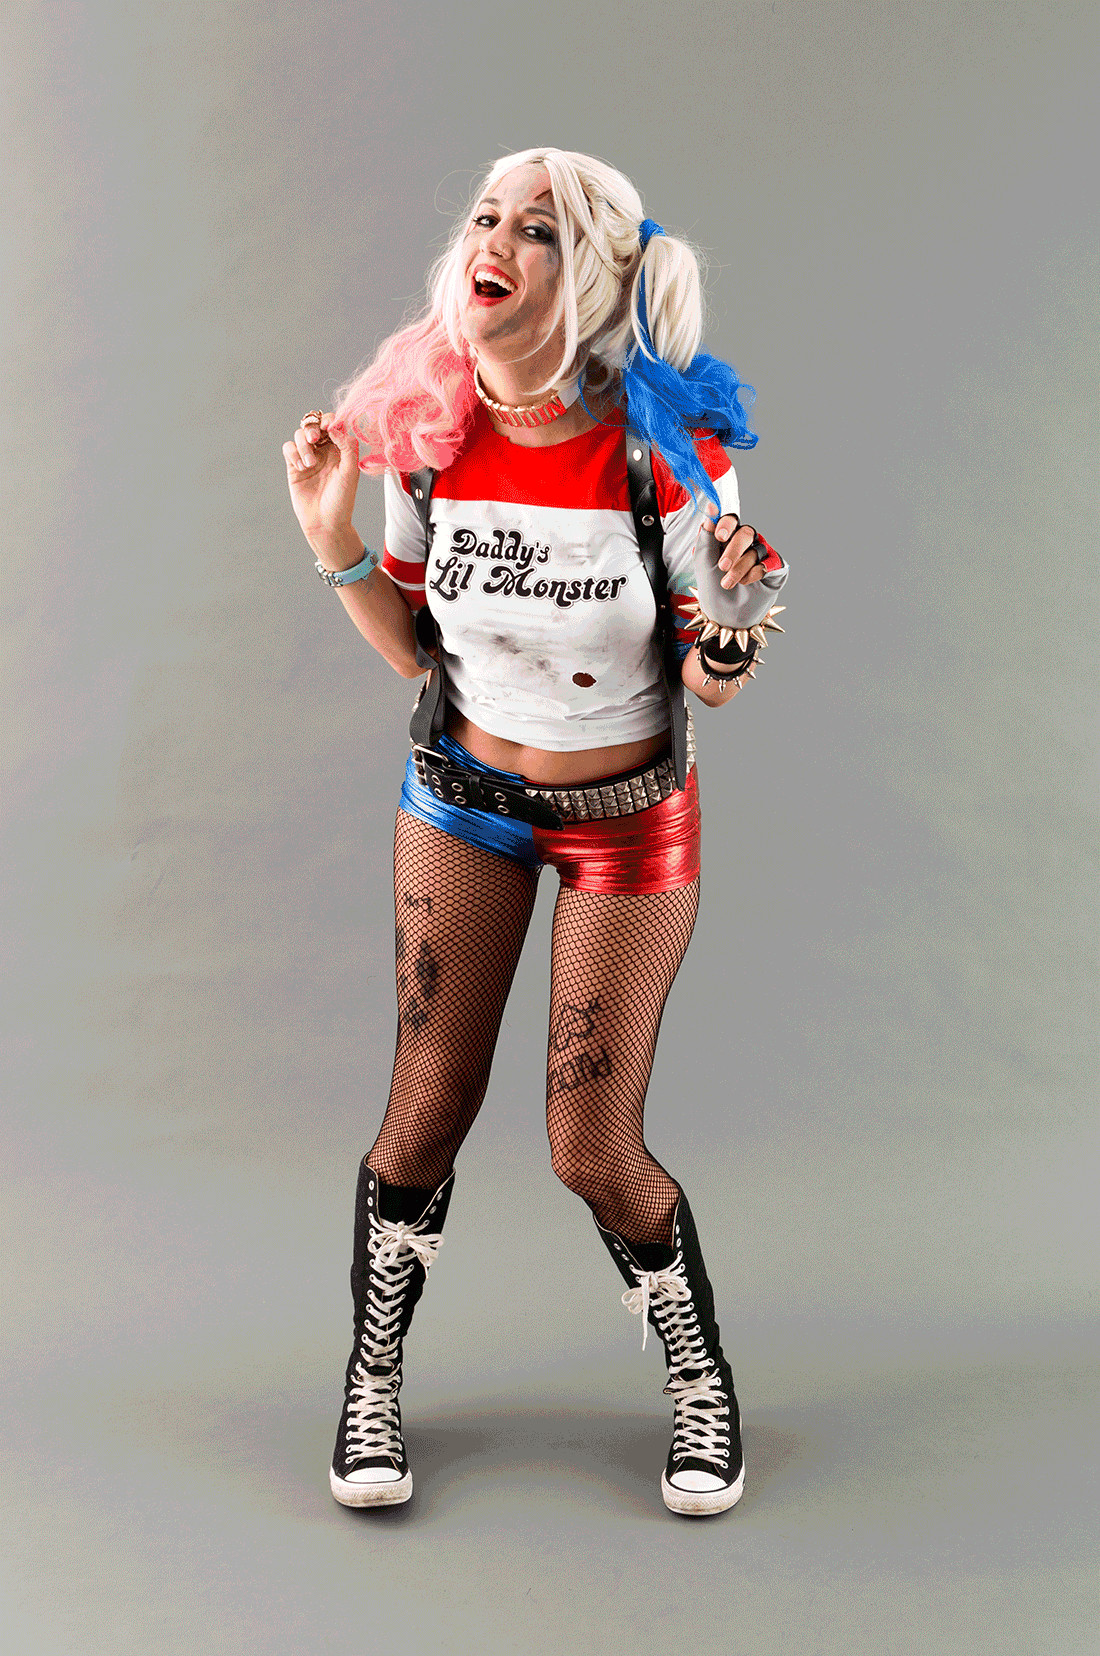 Harley Quinn Costume Ideas DIY
 How to Make Suicide Squad’s Harley Quinn Costume for